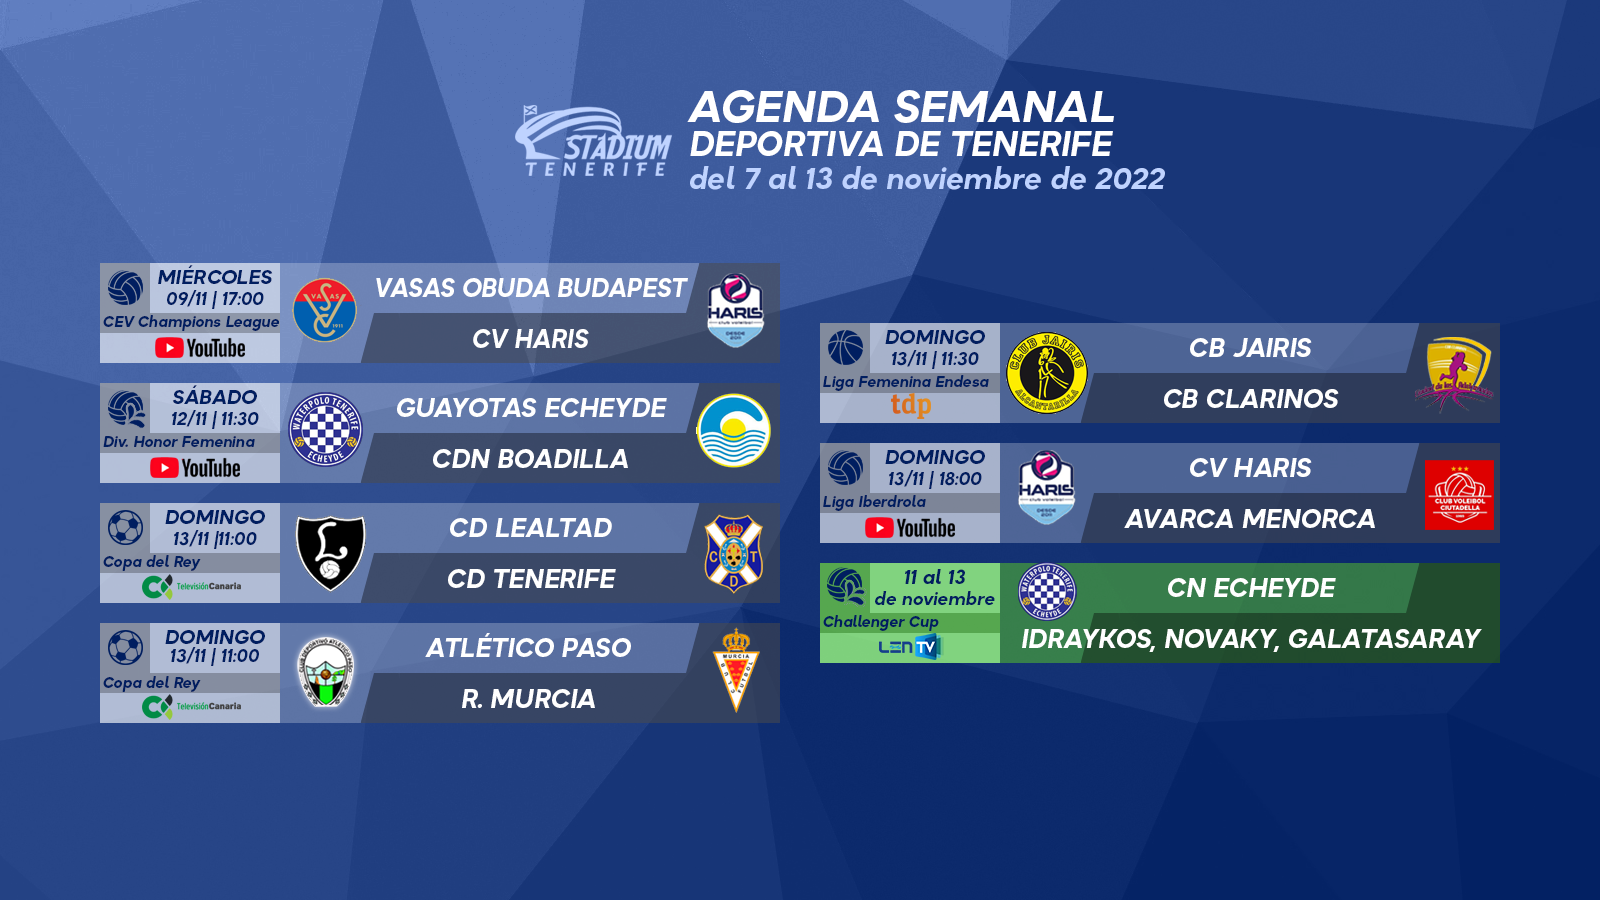 Agenda Semanal Deportiva de Tenerife (7 al 13 de noviembre)